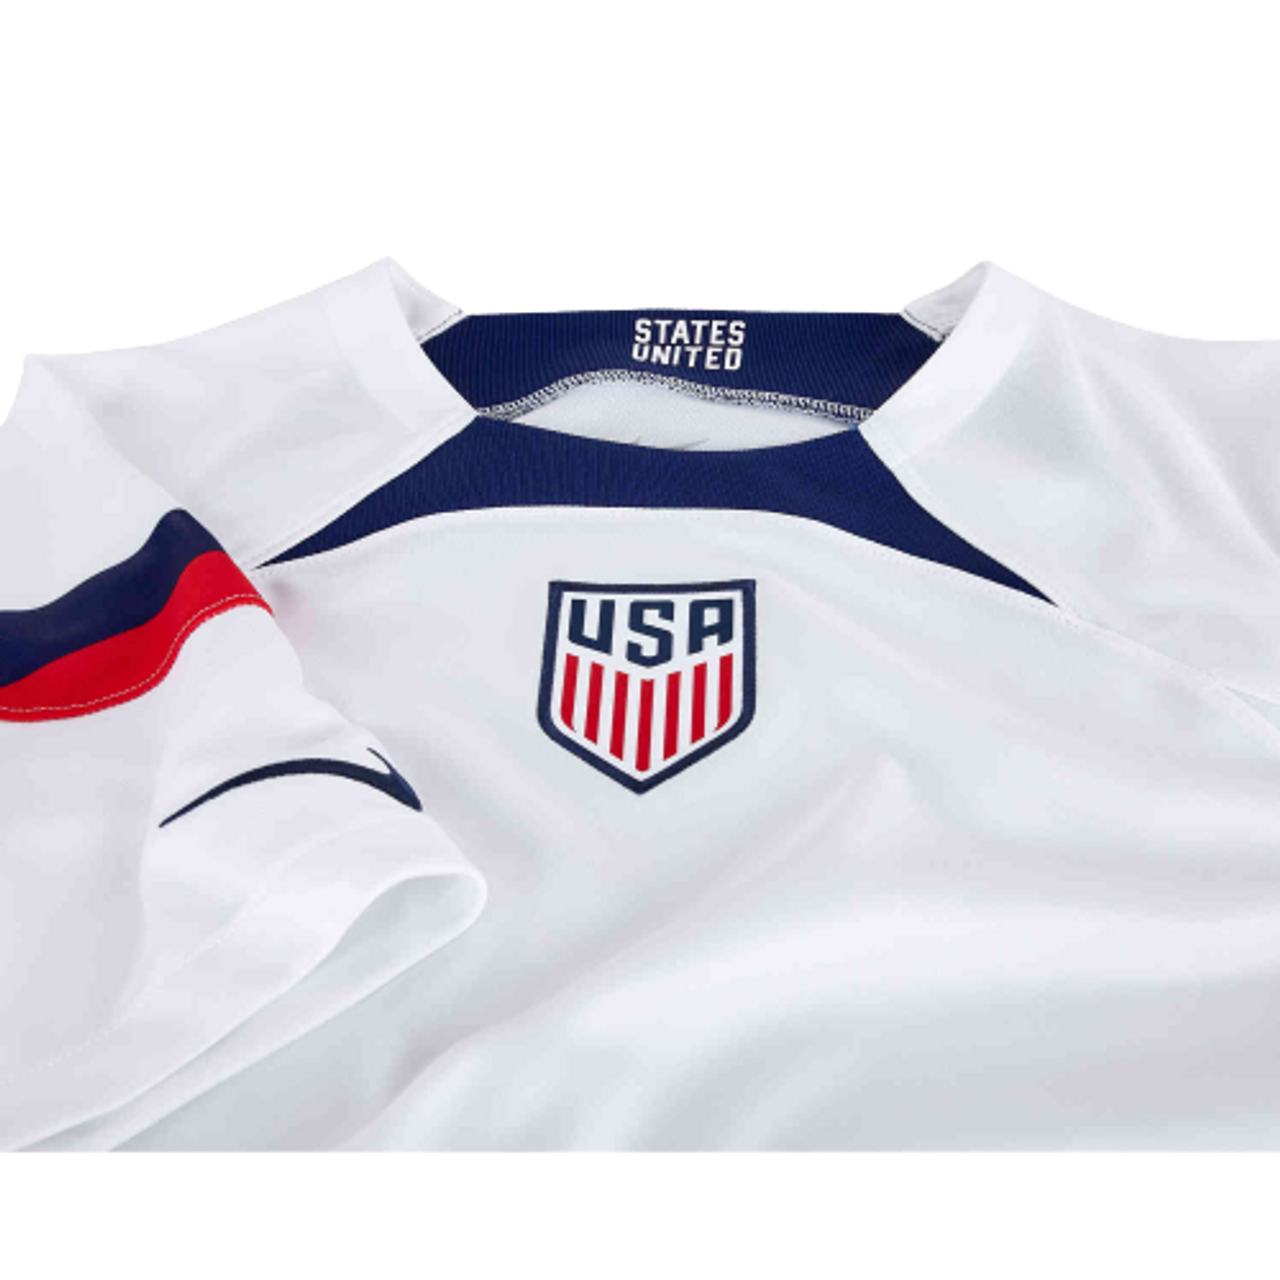 Team USA concept Jerseys. - Northzone Sportshub